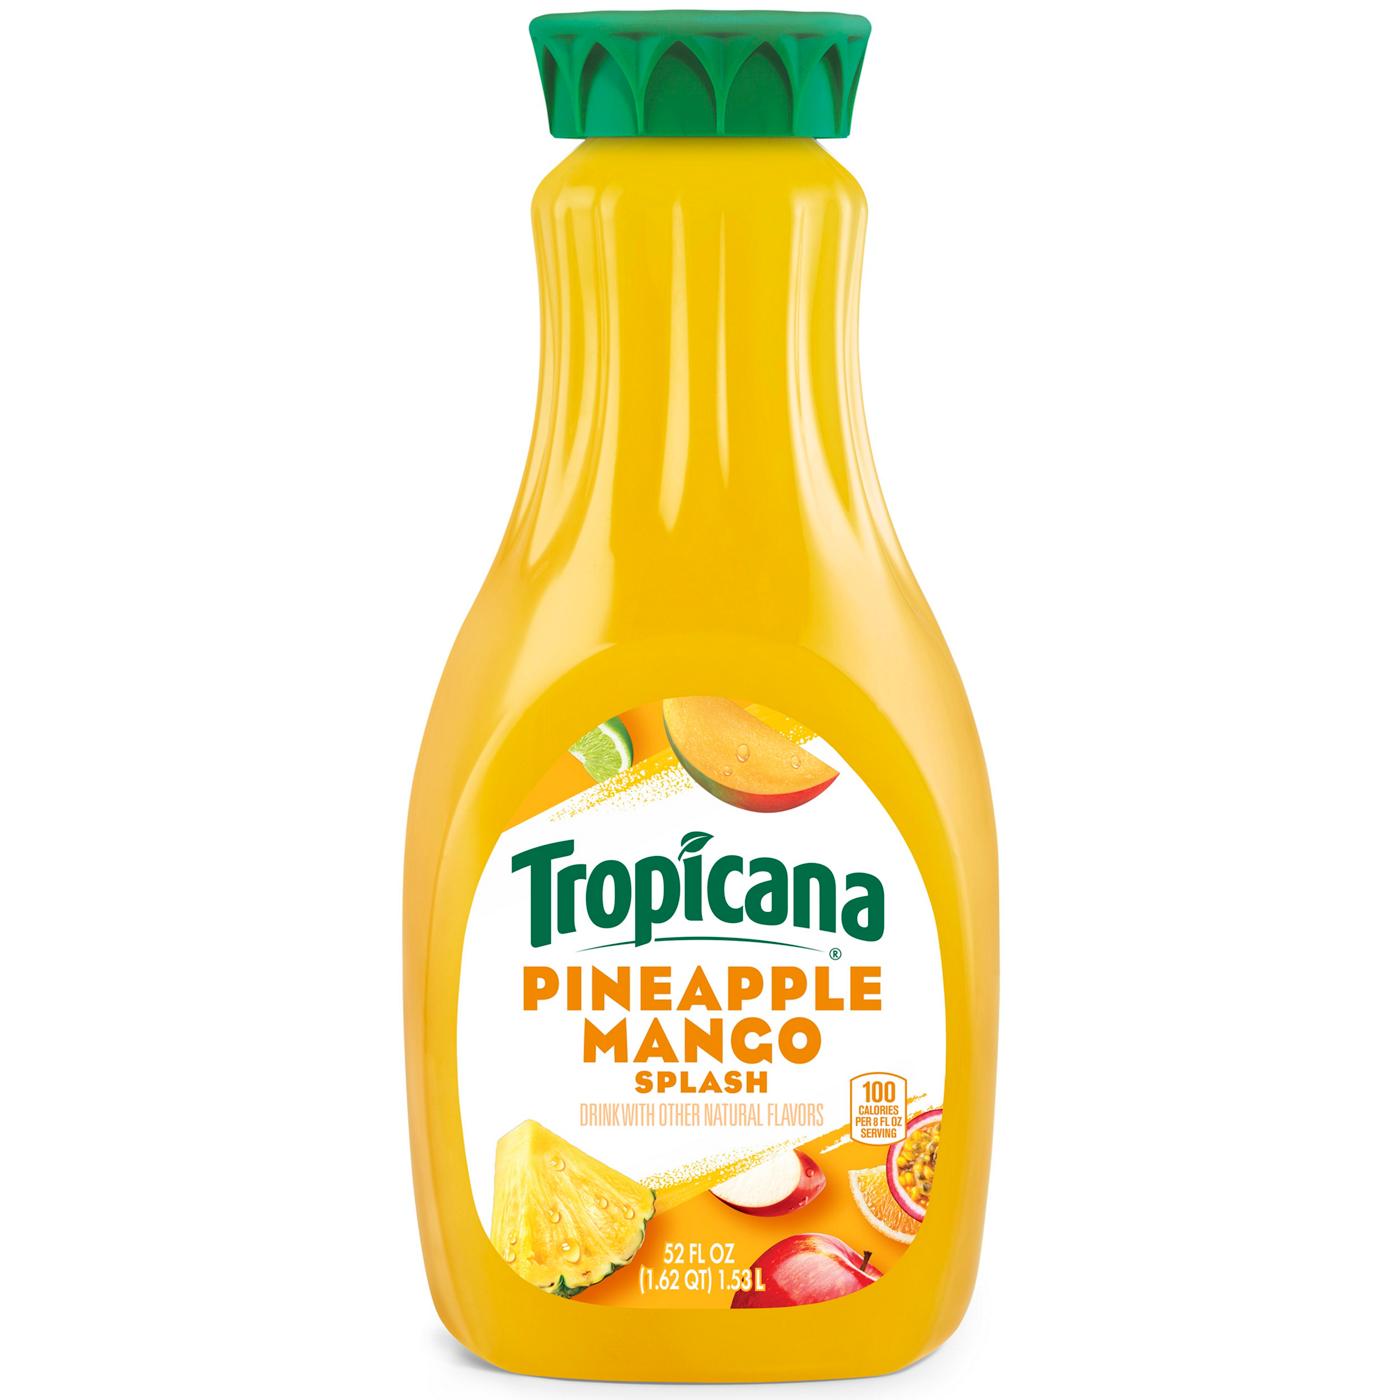 Tropicana Pineapple Mango Splash; image 1 of 2